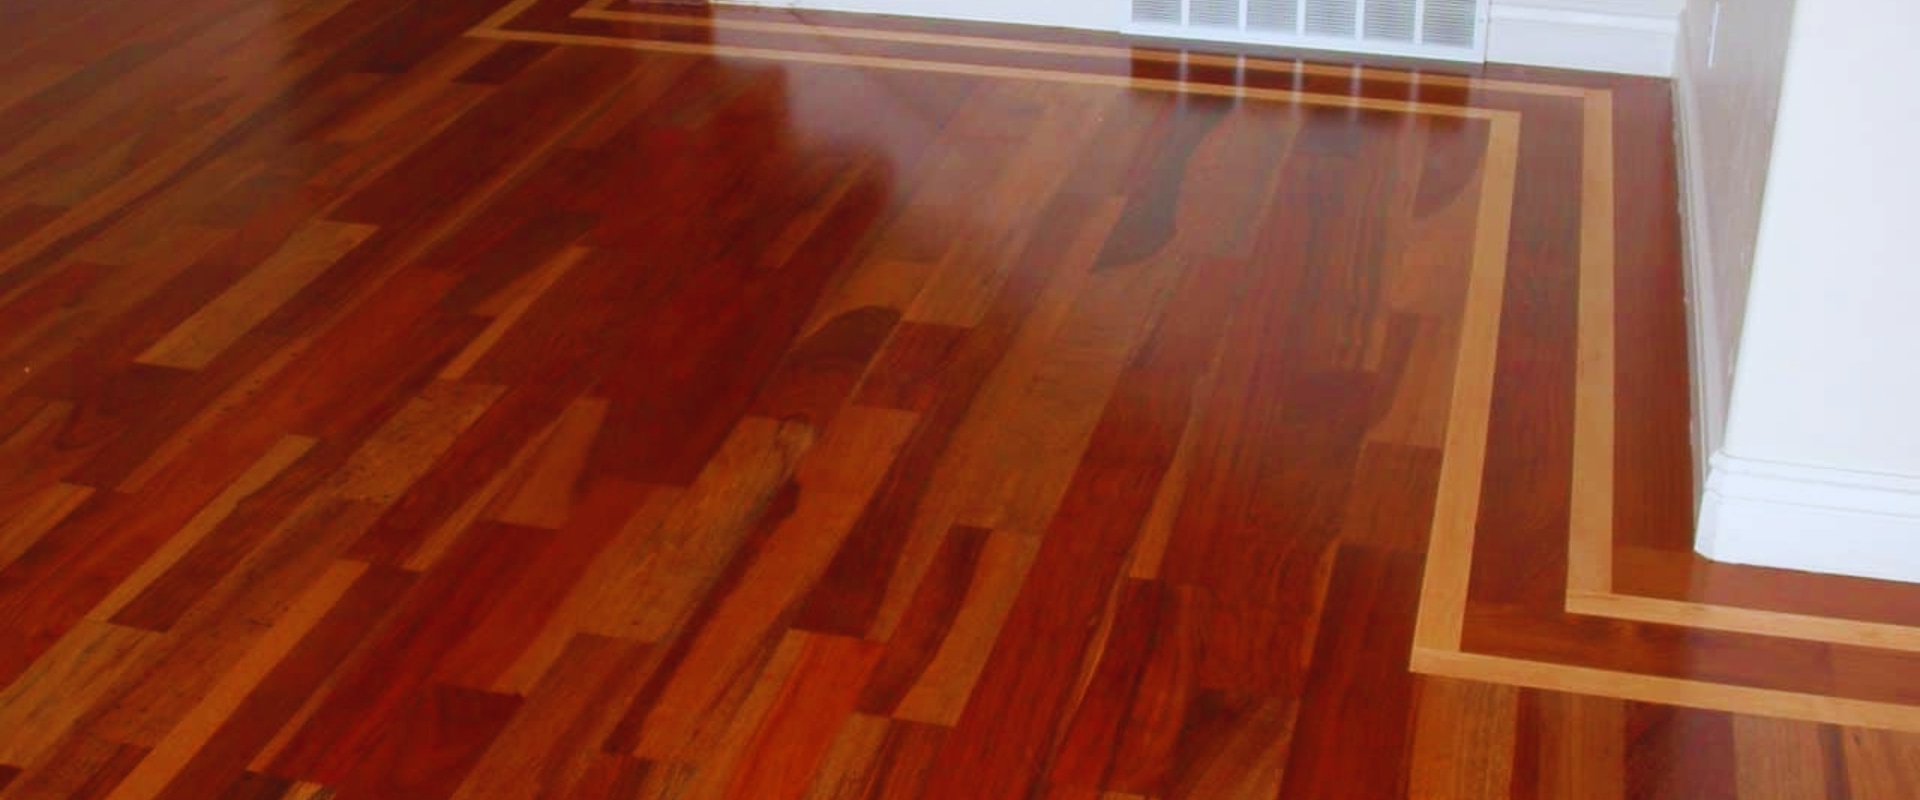 What hardwood floors are the hardest?